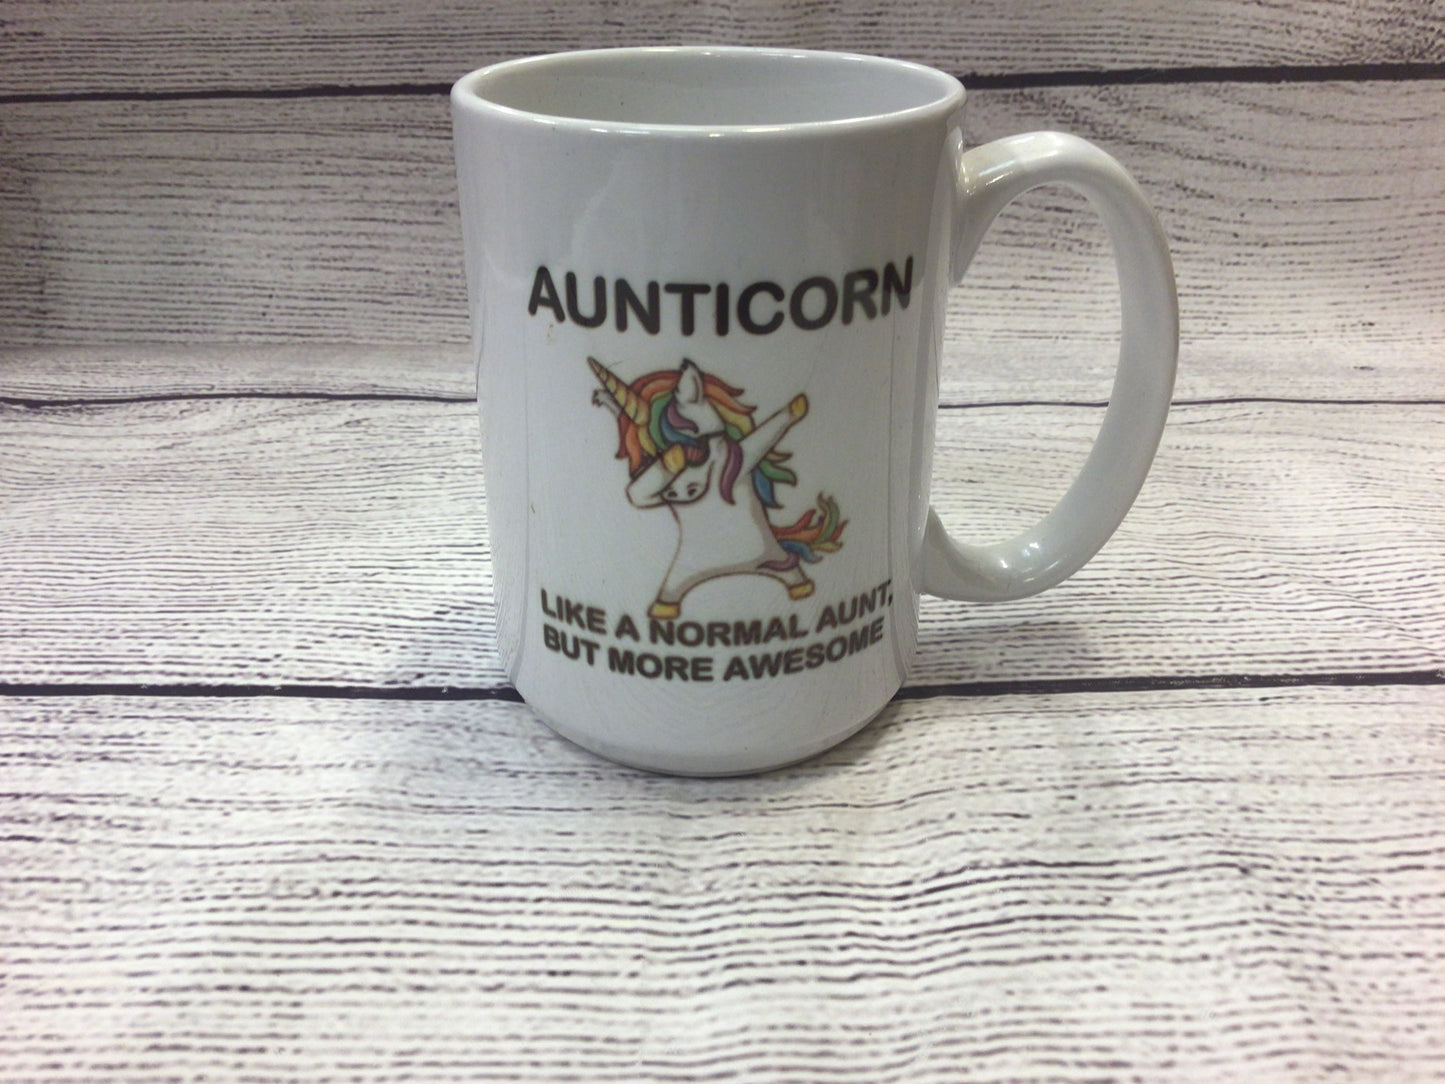 Aunticorn mug